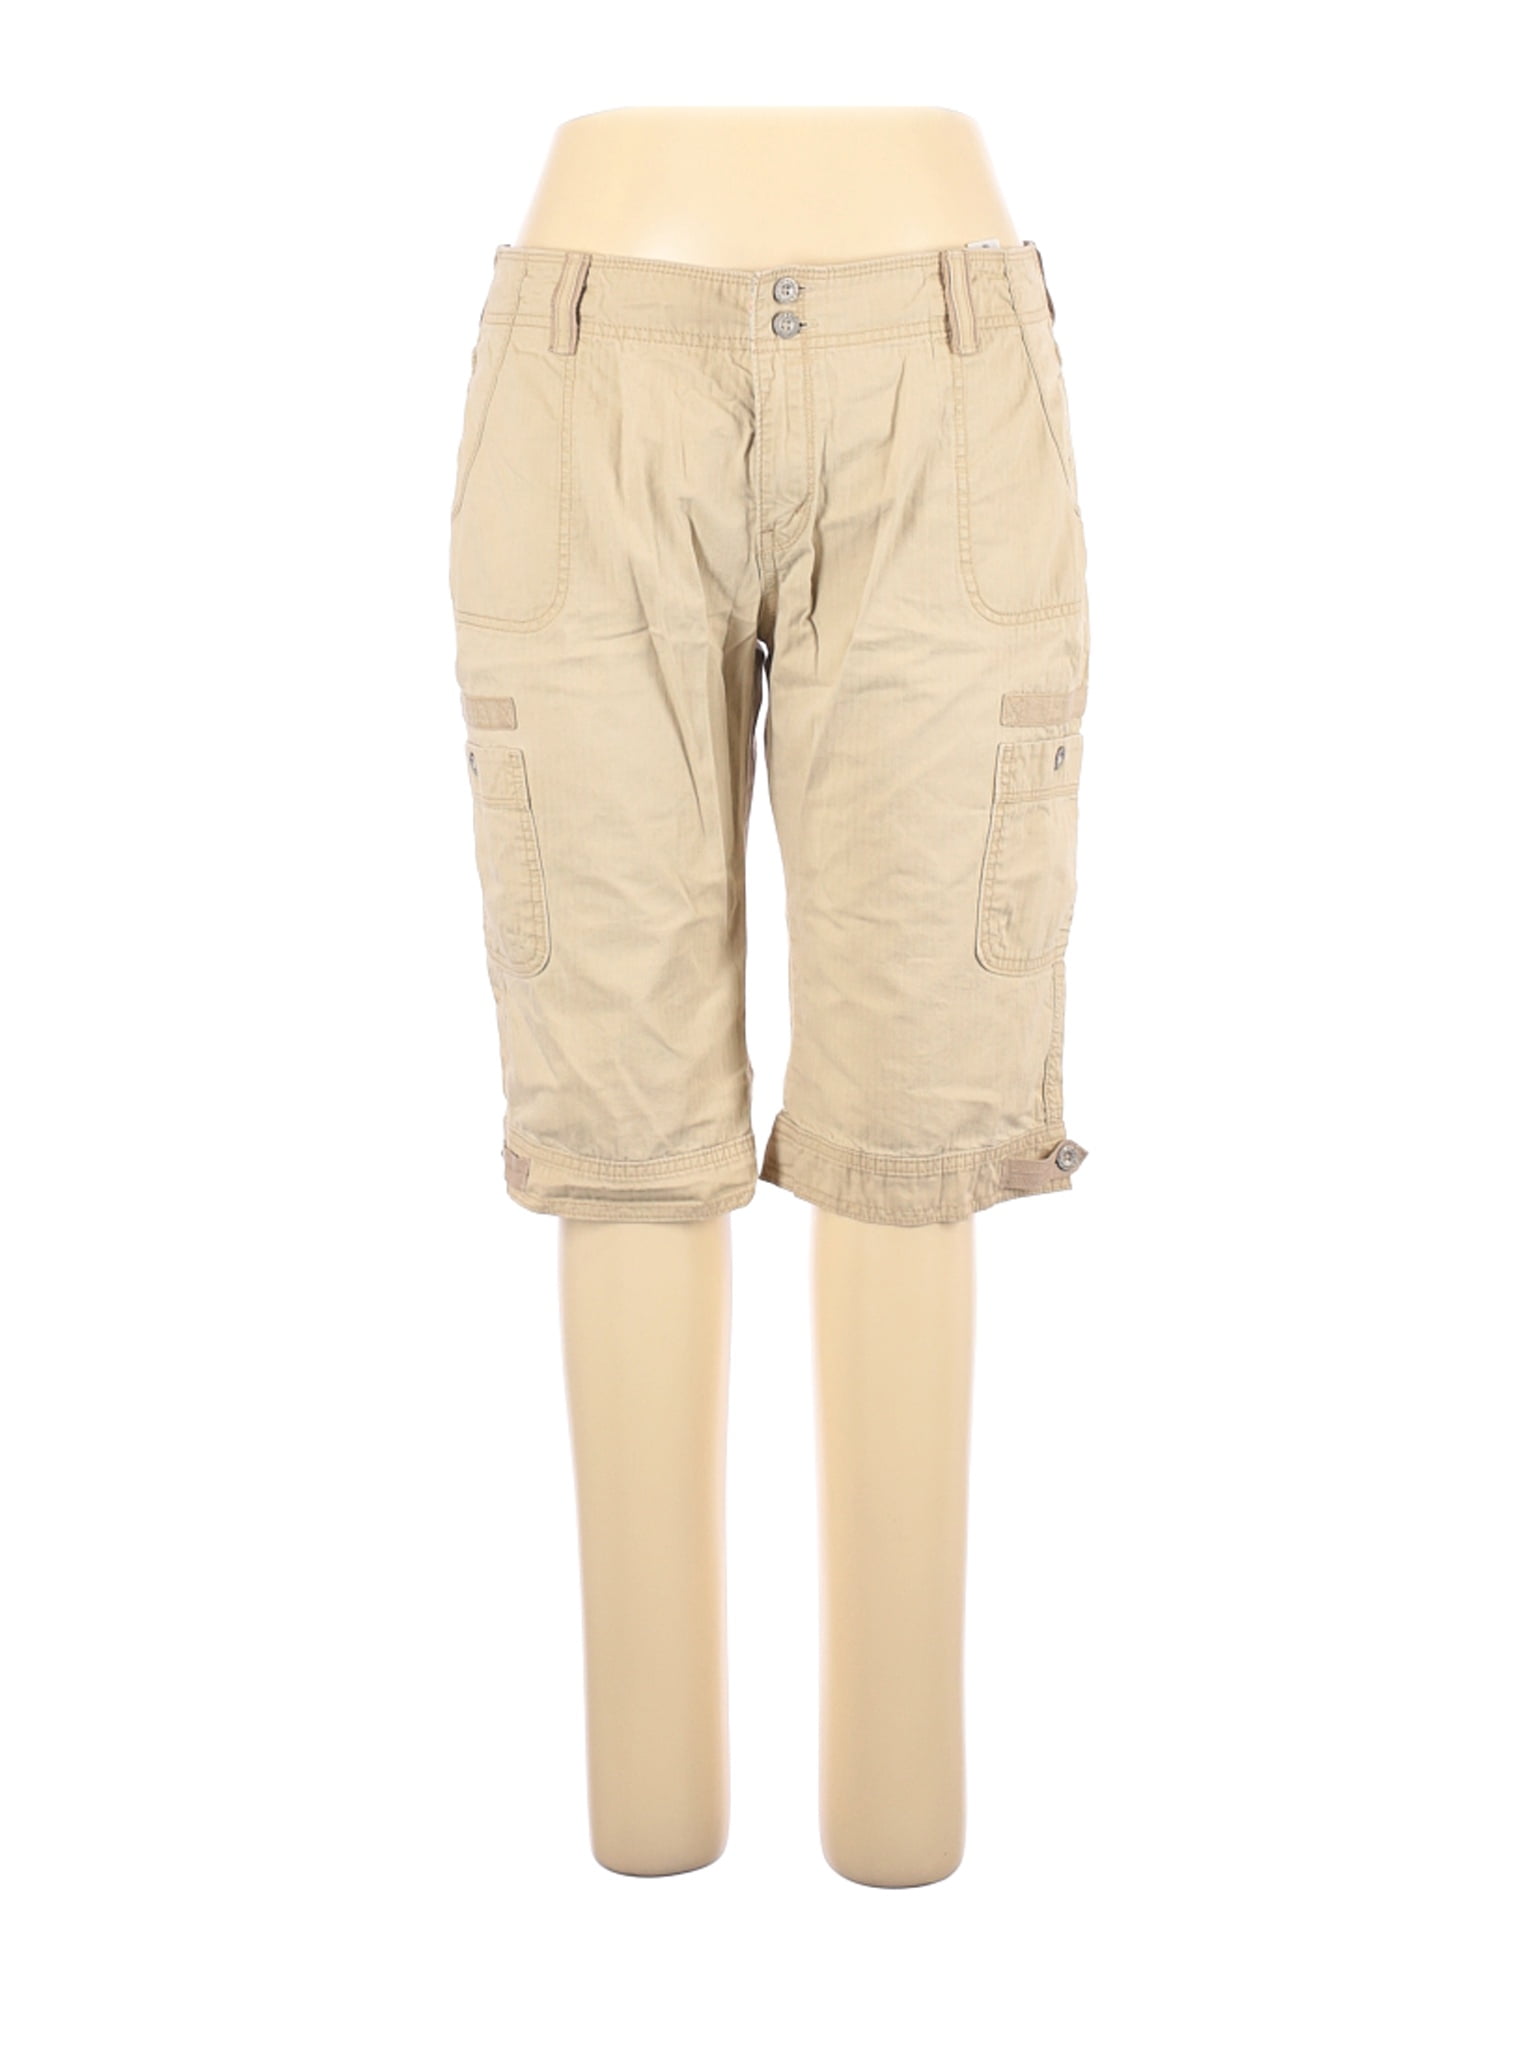 cargo pants size 16